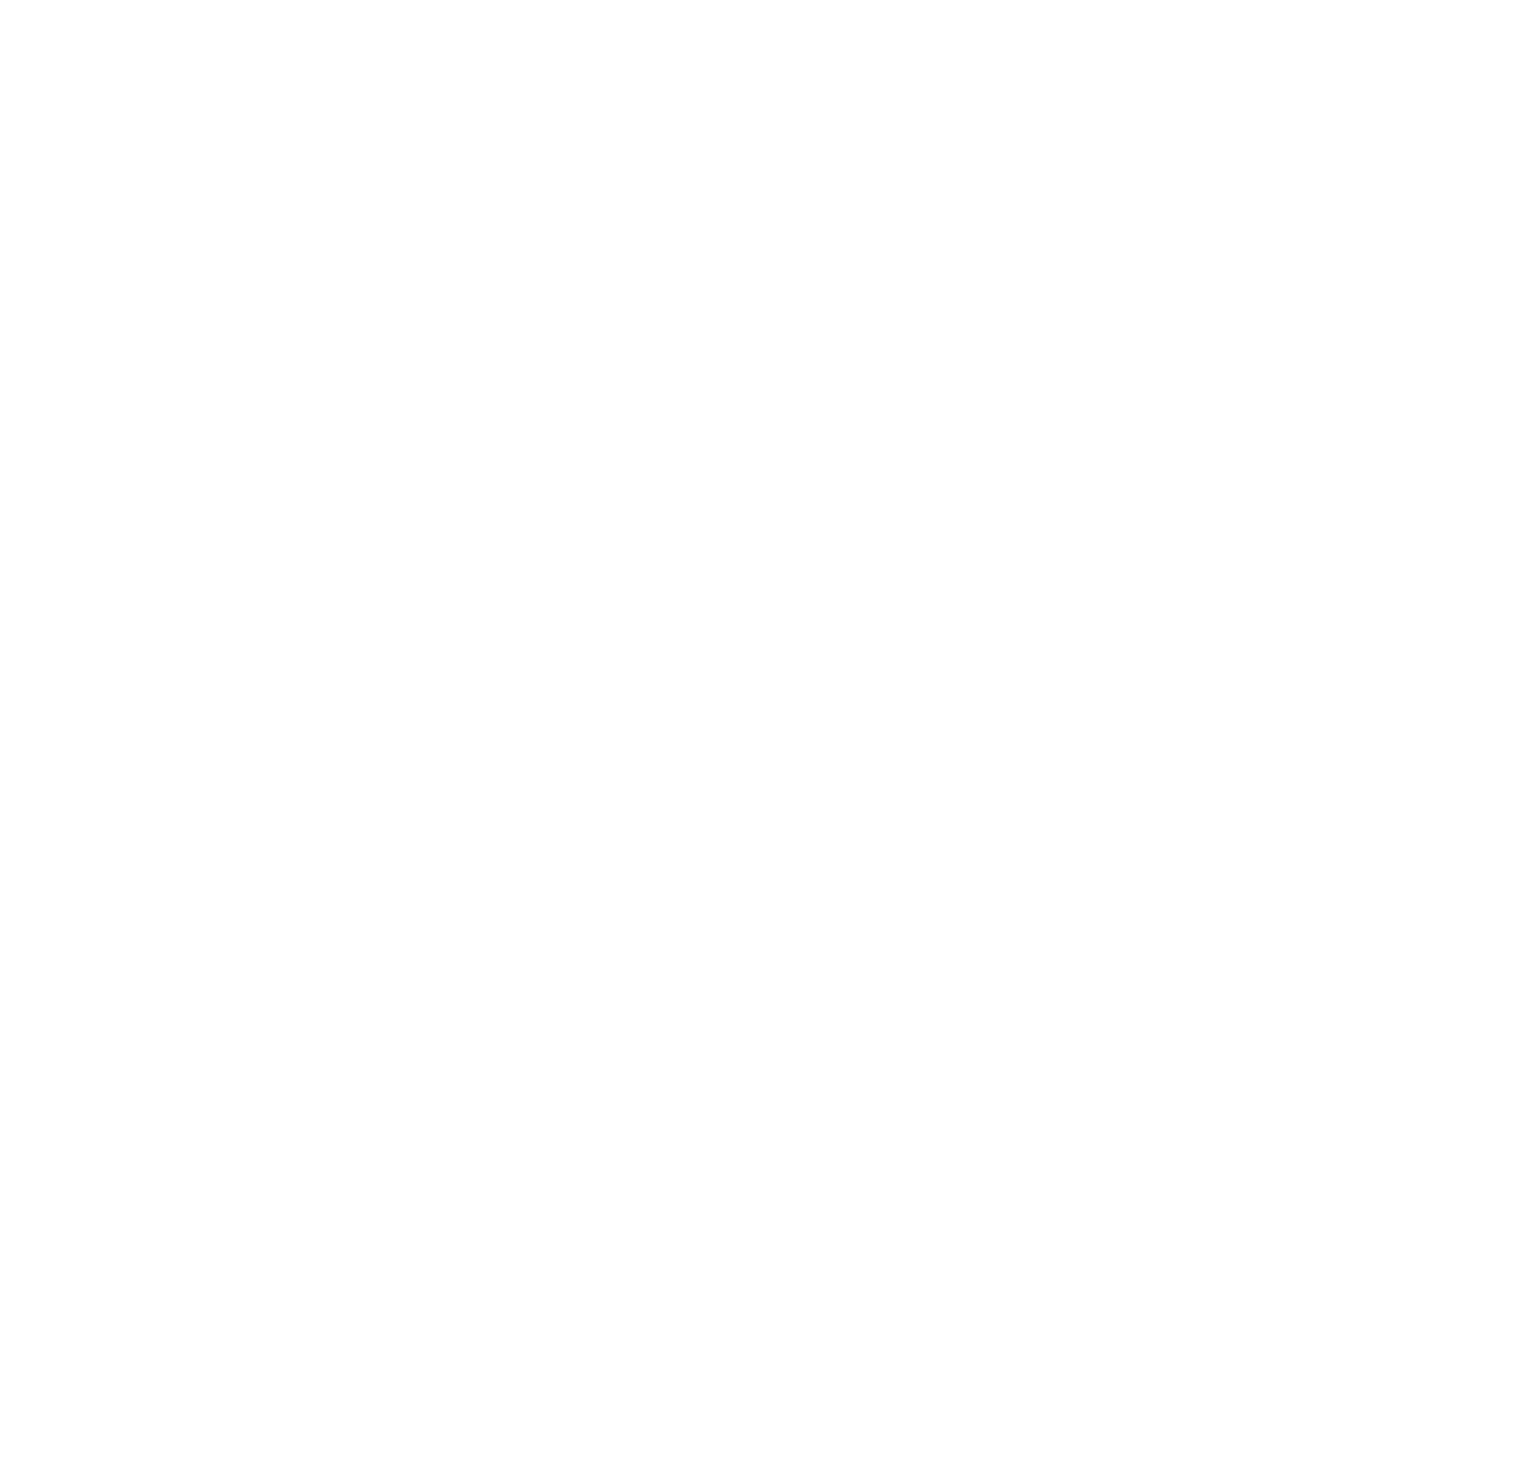 C&S Wholesale Grocers logo for dark backgrounds (transparent PNG)